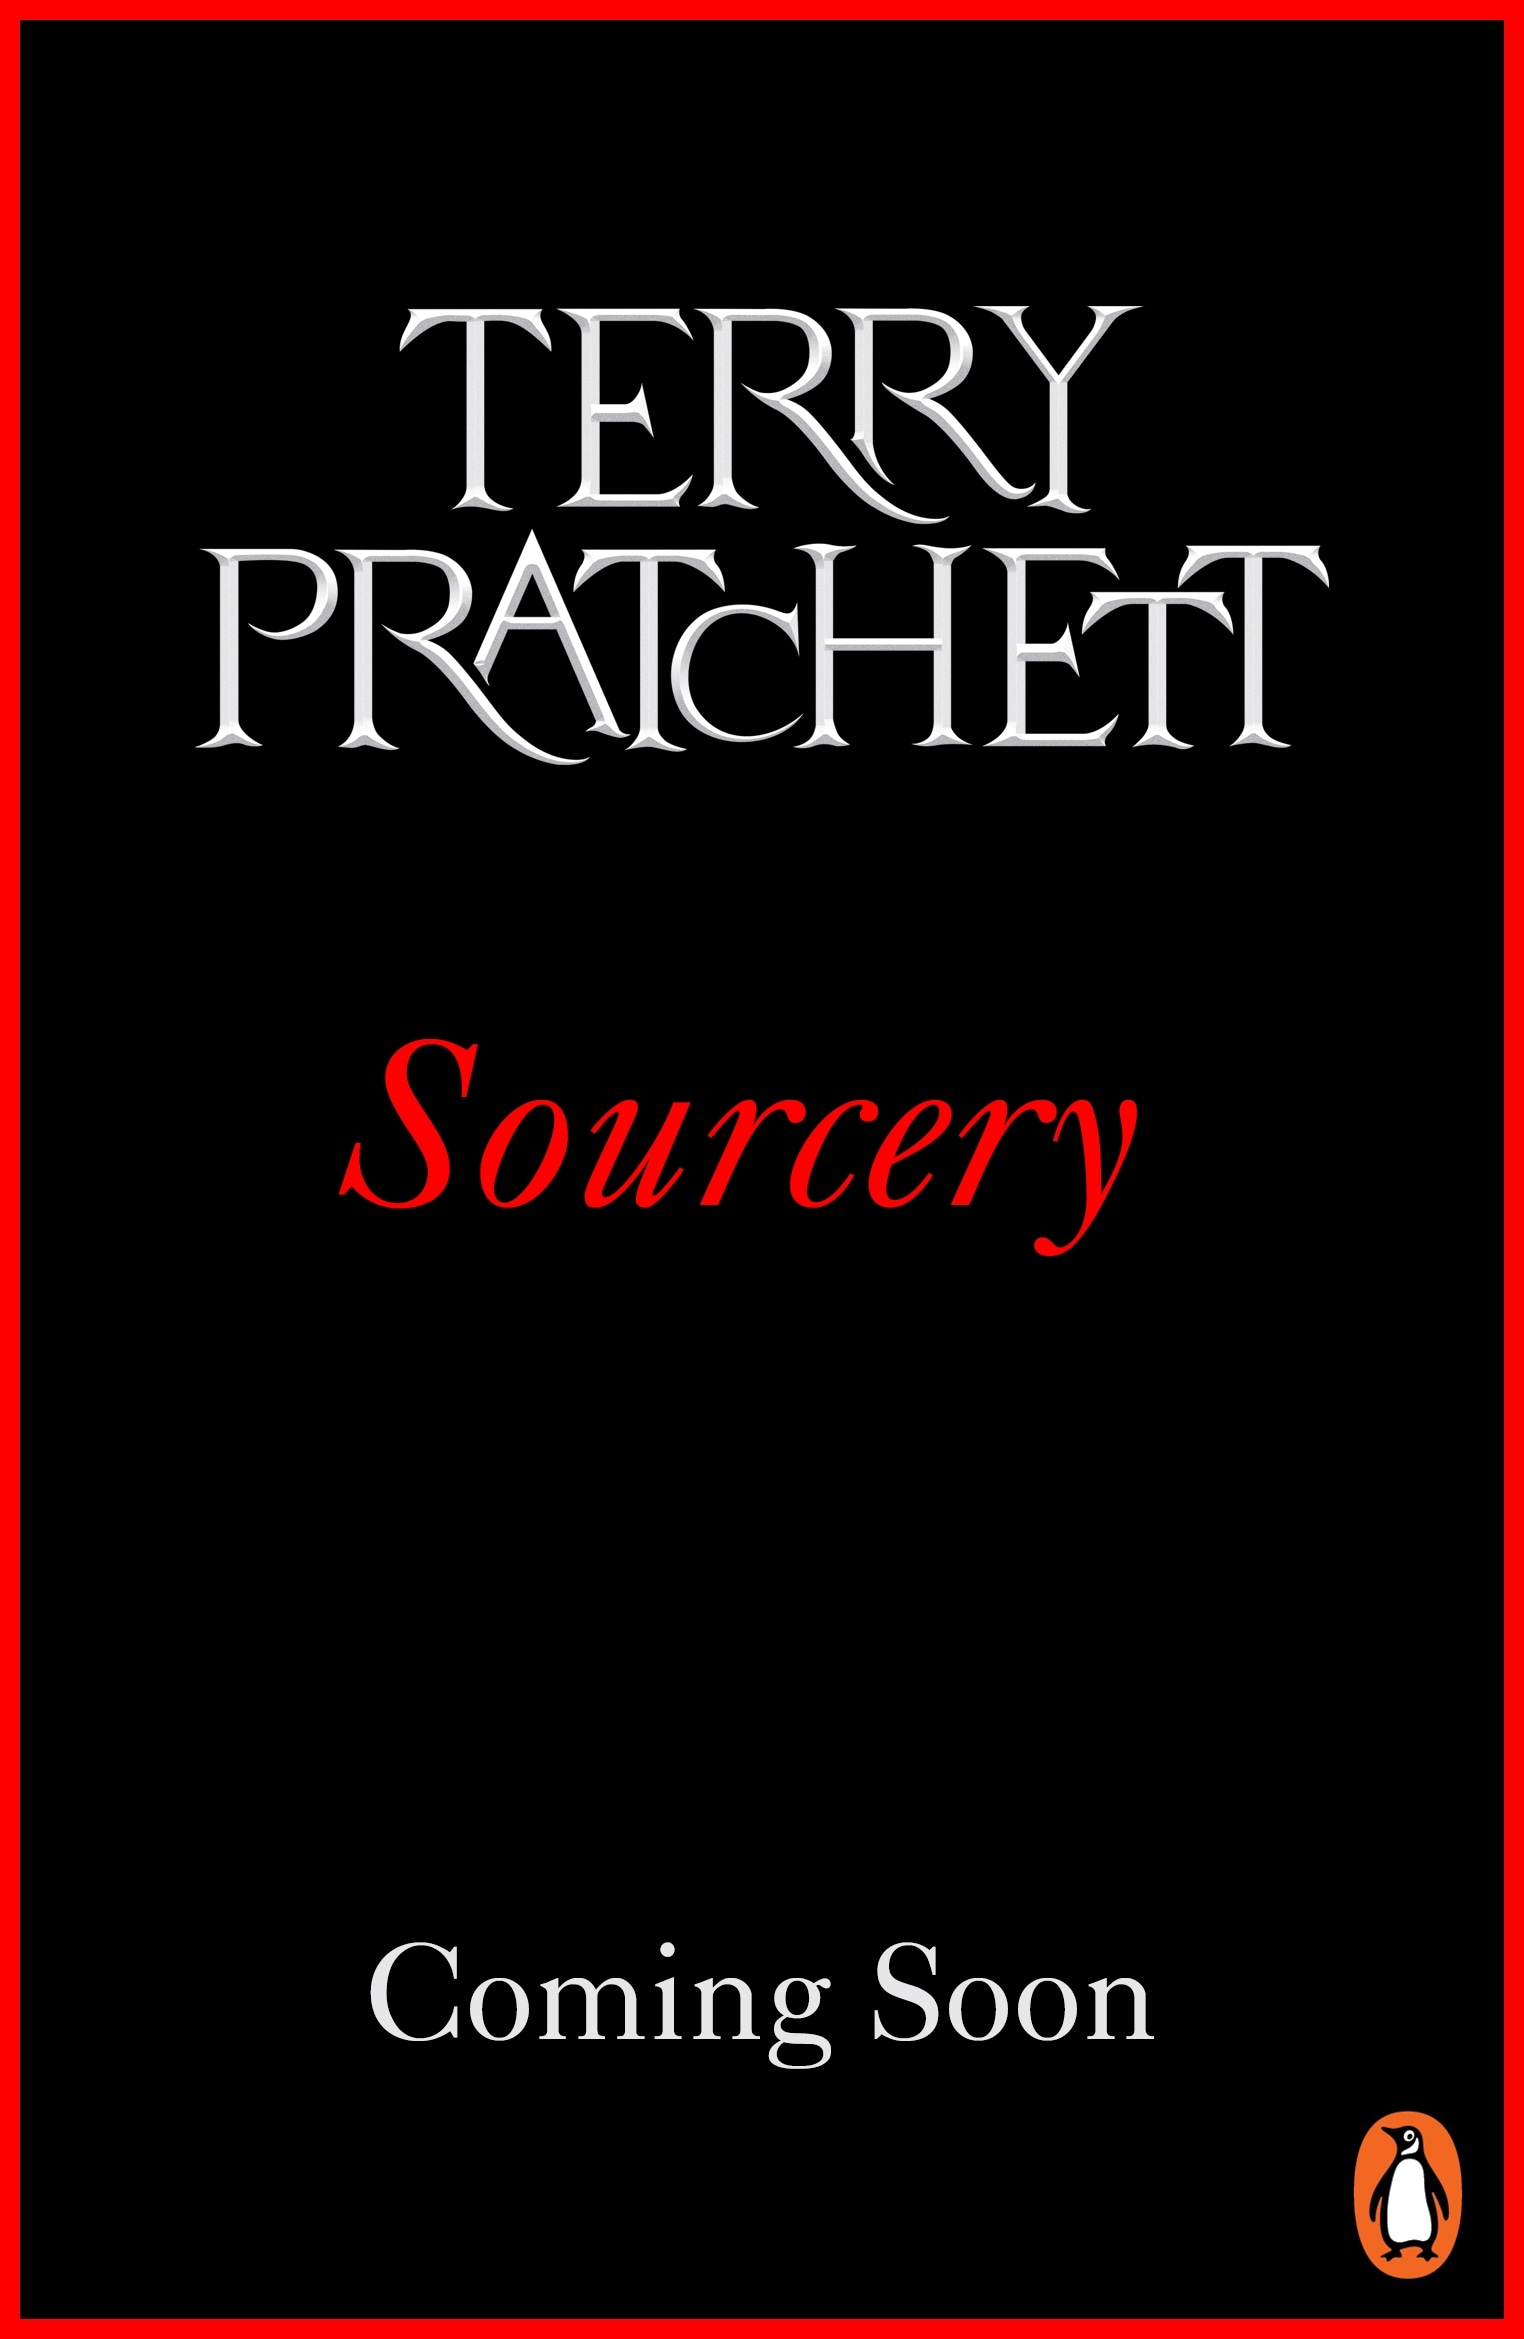 Book “Sourcery” by Terry Pratchett — July 28, 2022